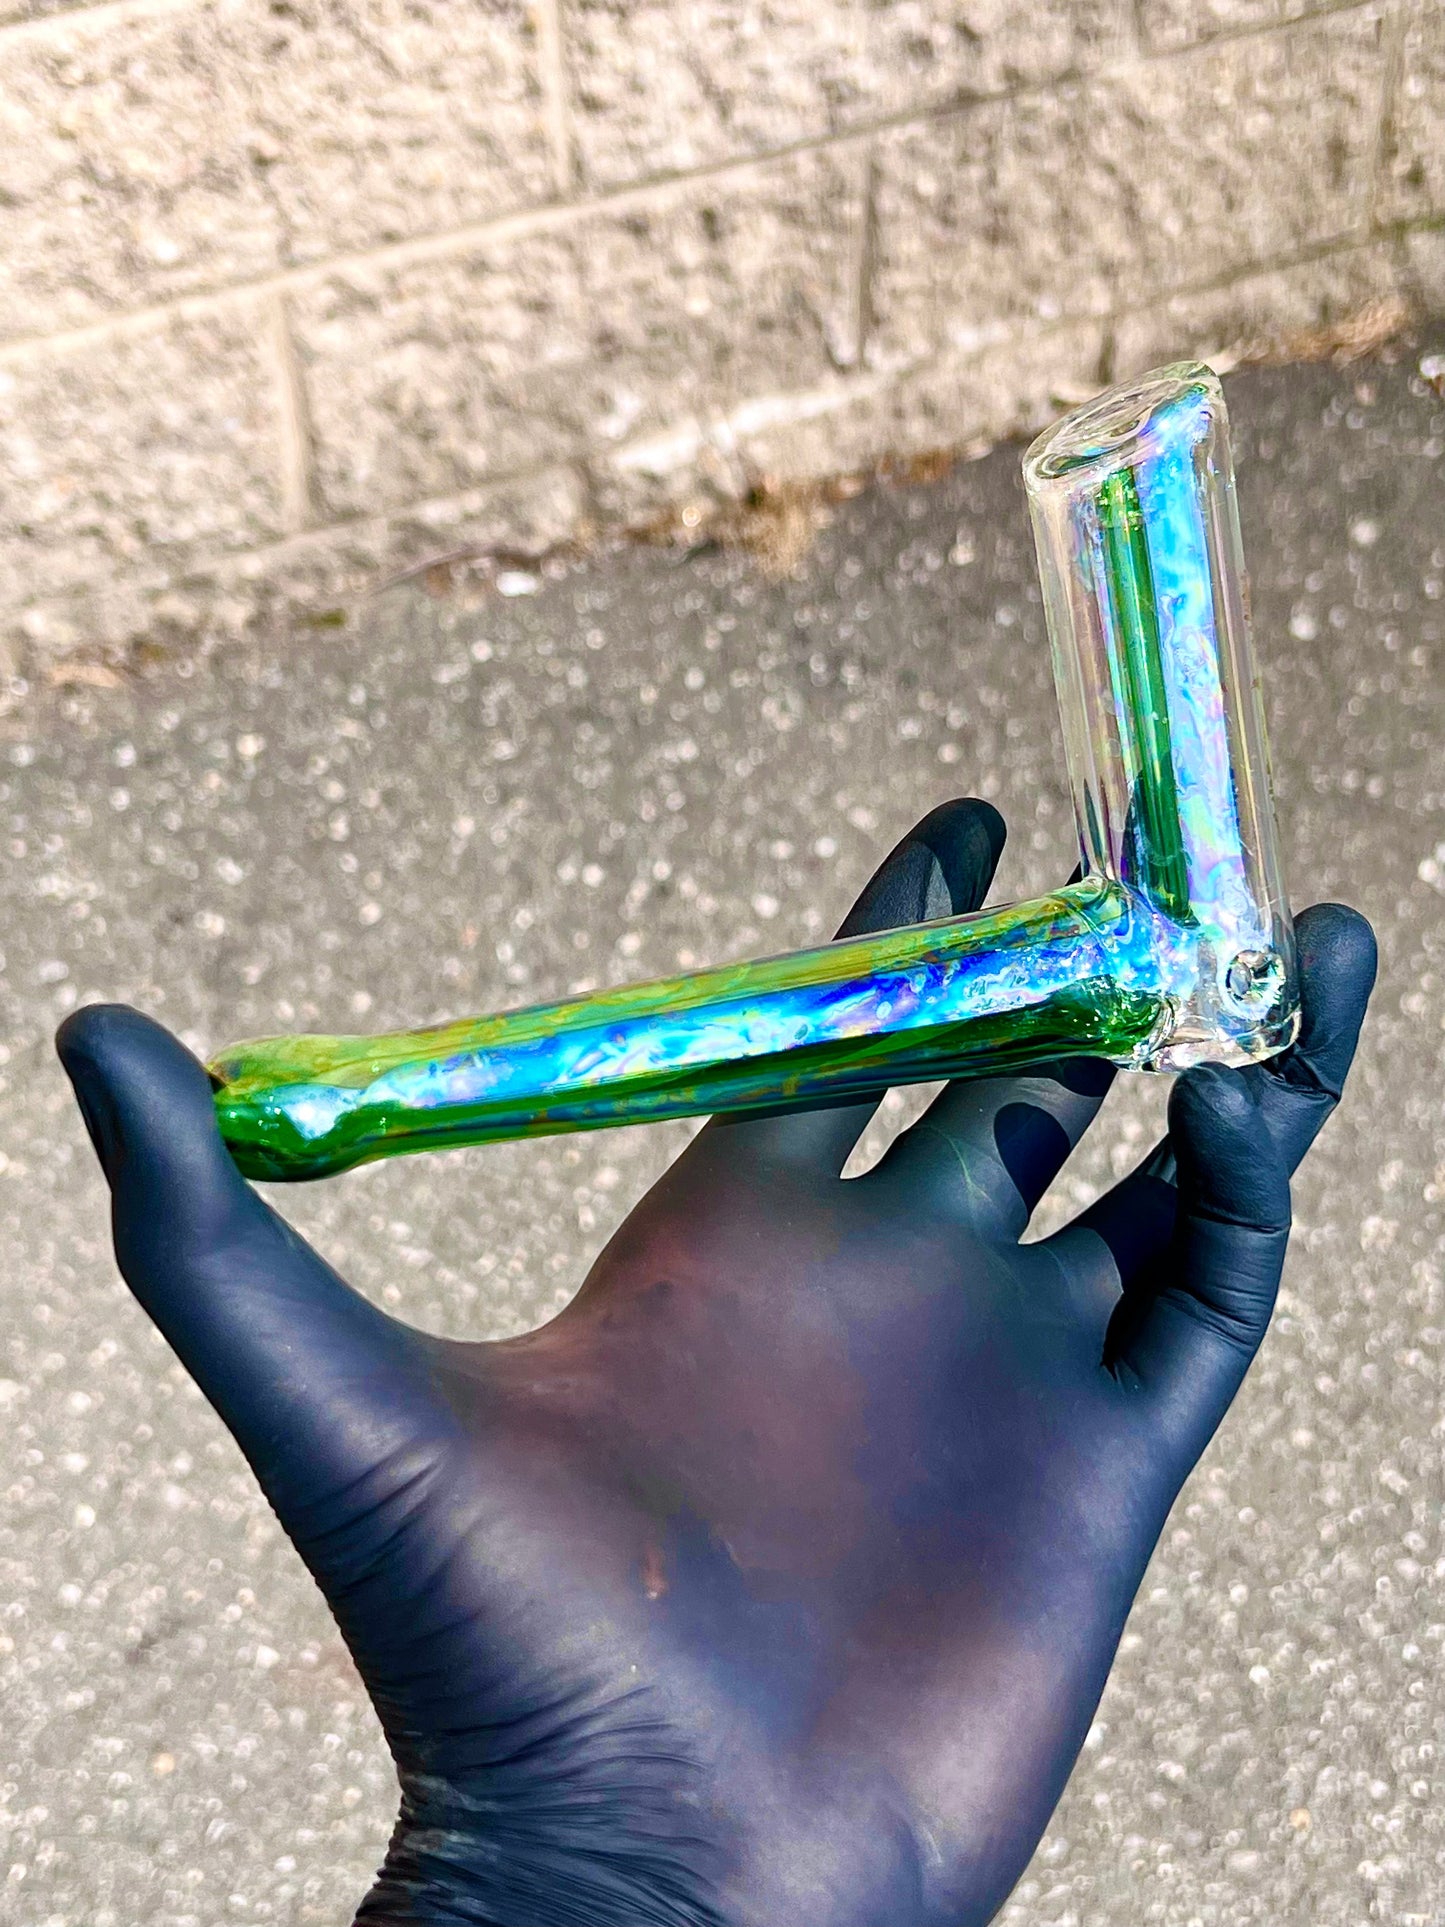 Bubham 1 - Hammer Bubbler by New Amsterdam Glass